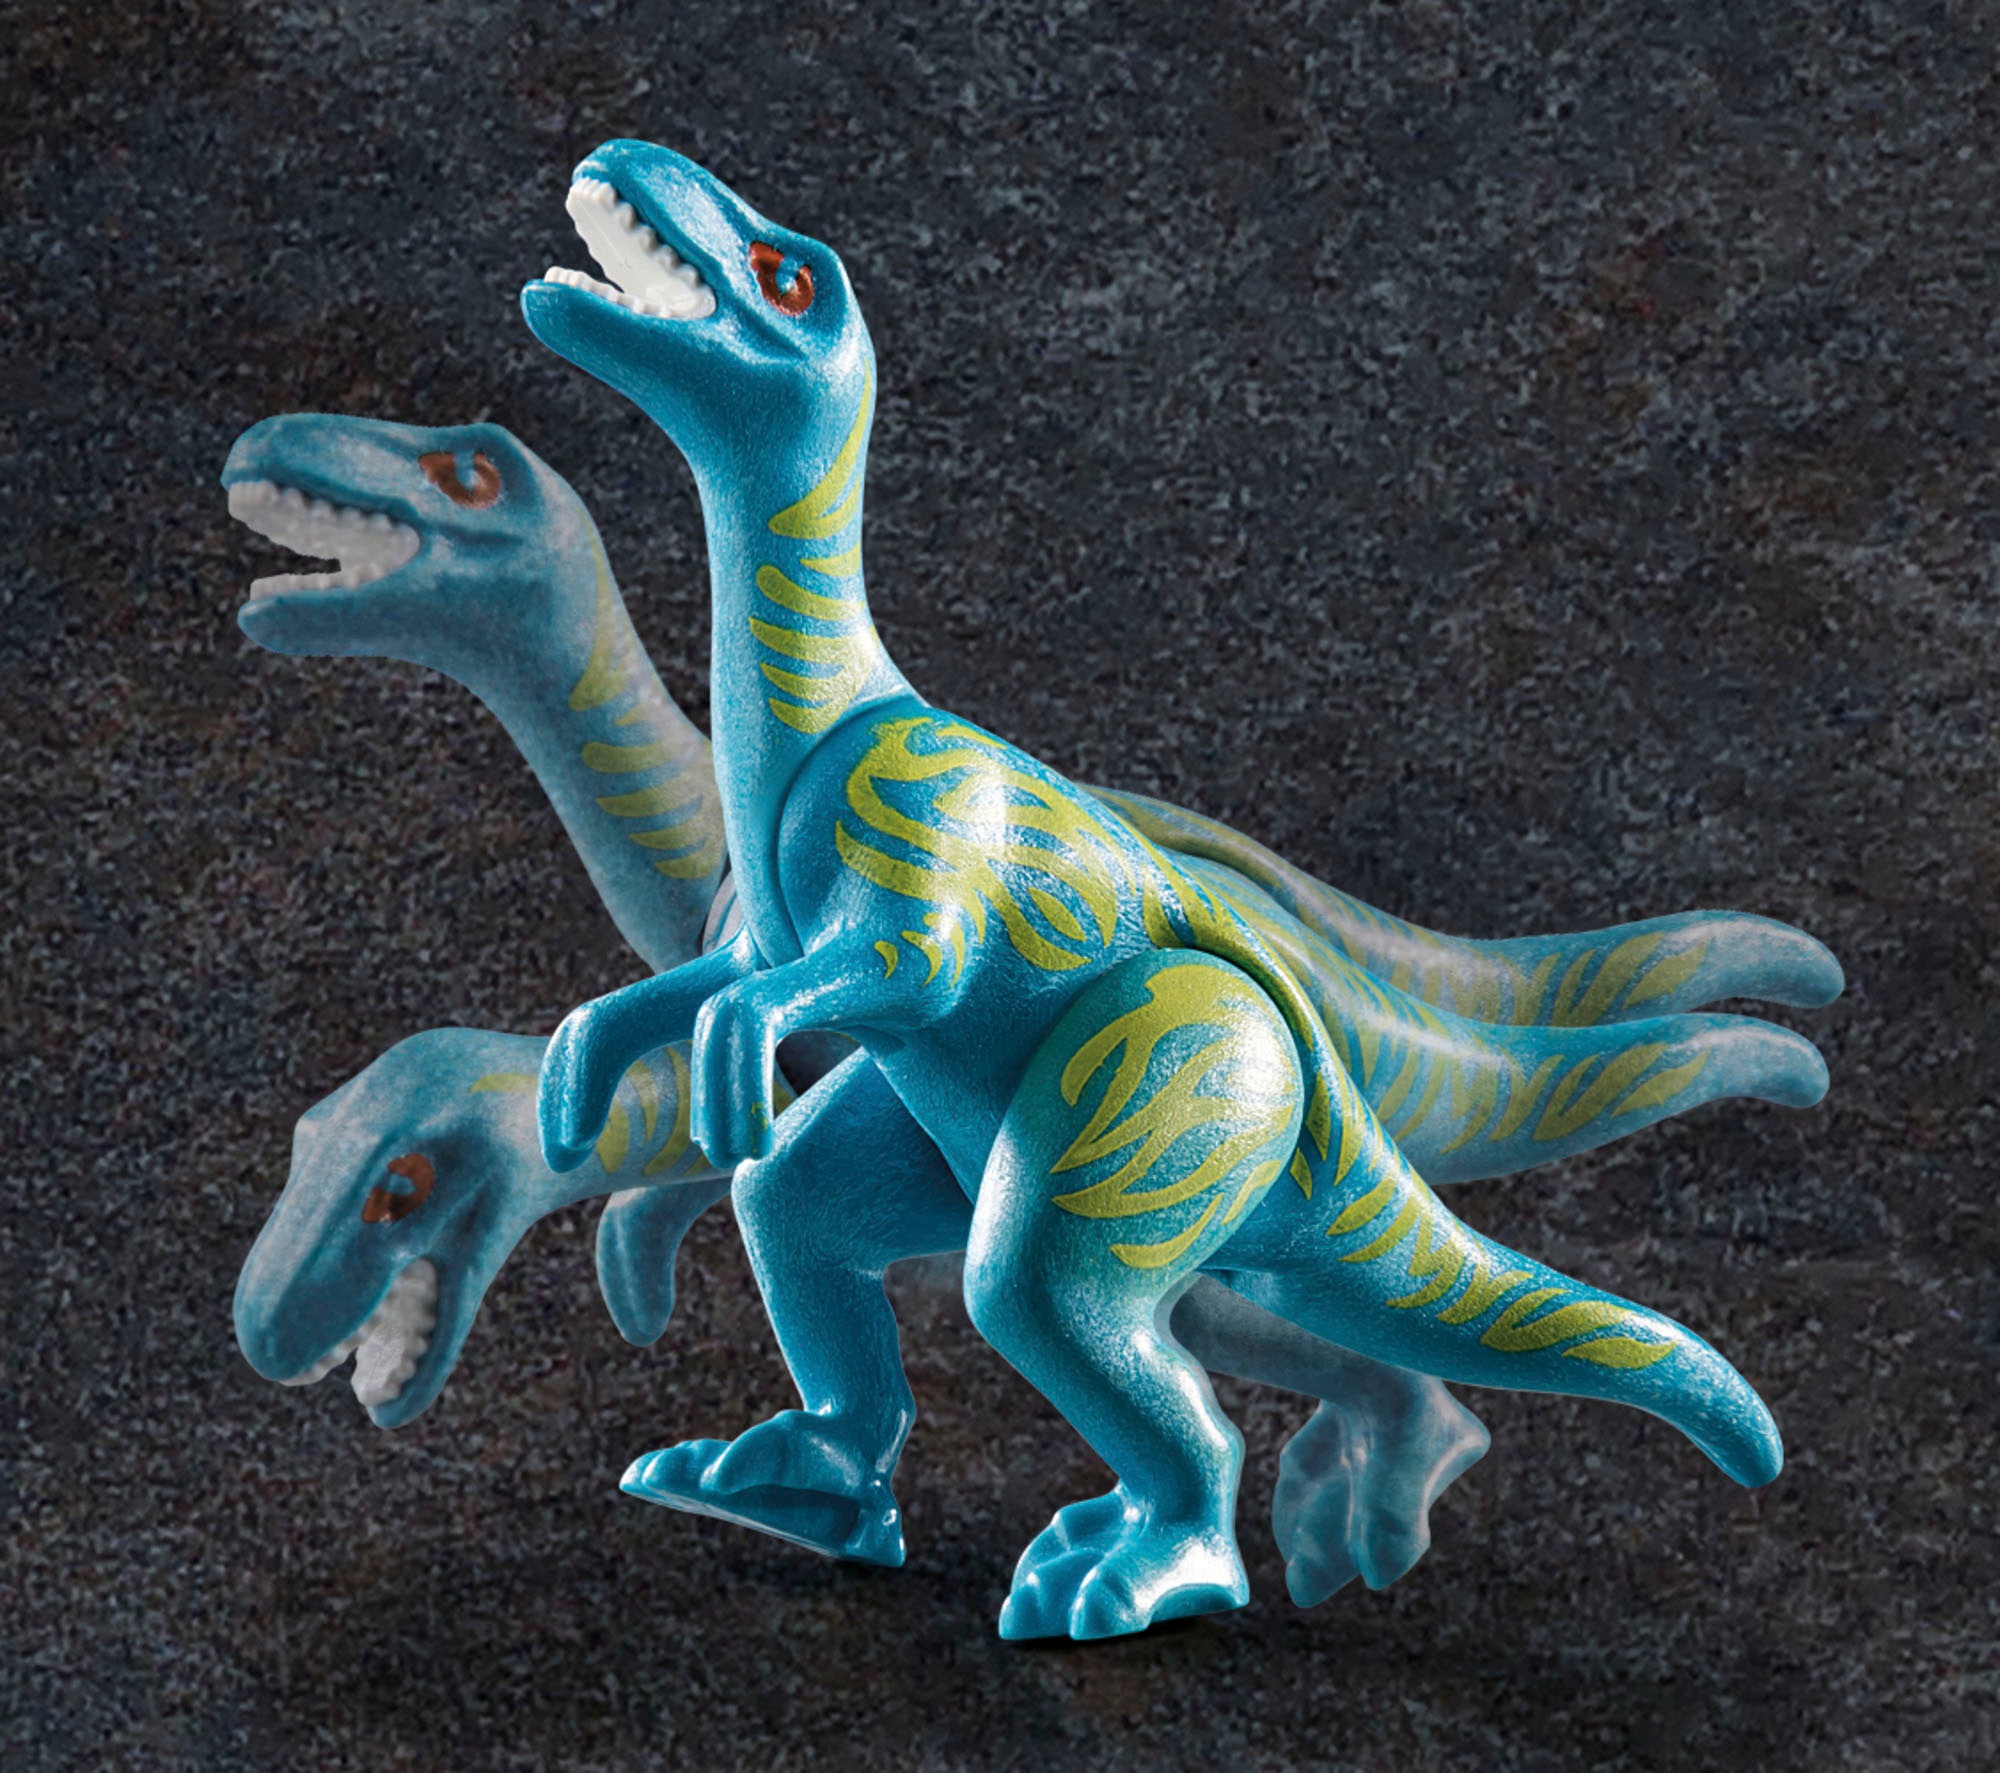 Playmobil® Konstruktions-Spielset »Starter Pack, Befreiung Triceratops (71378), Dino Rise«, (29 St.)